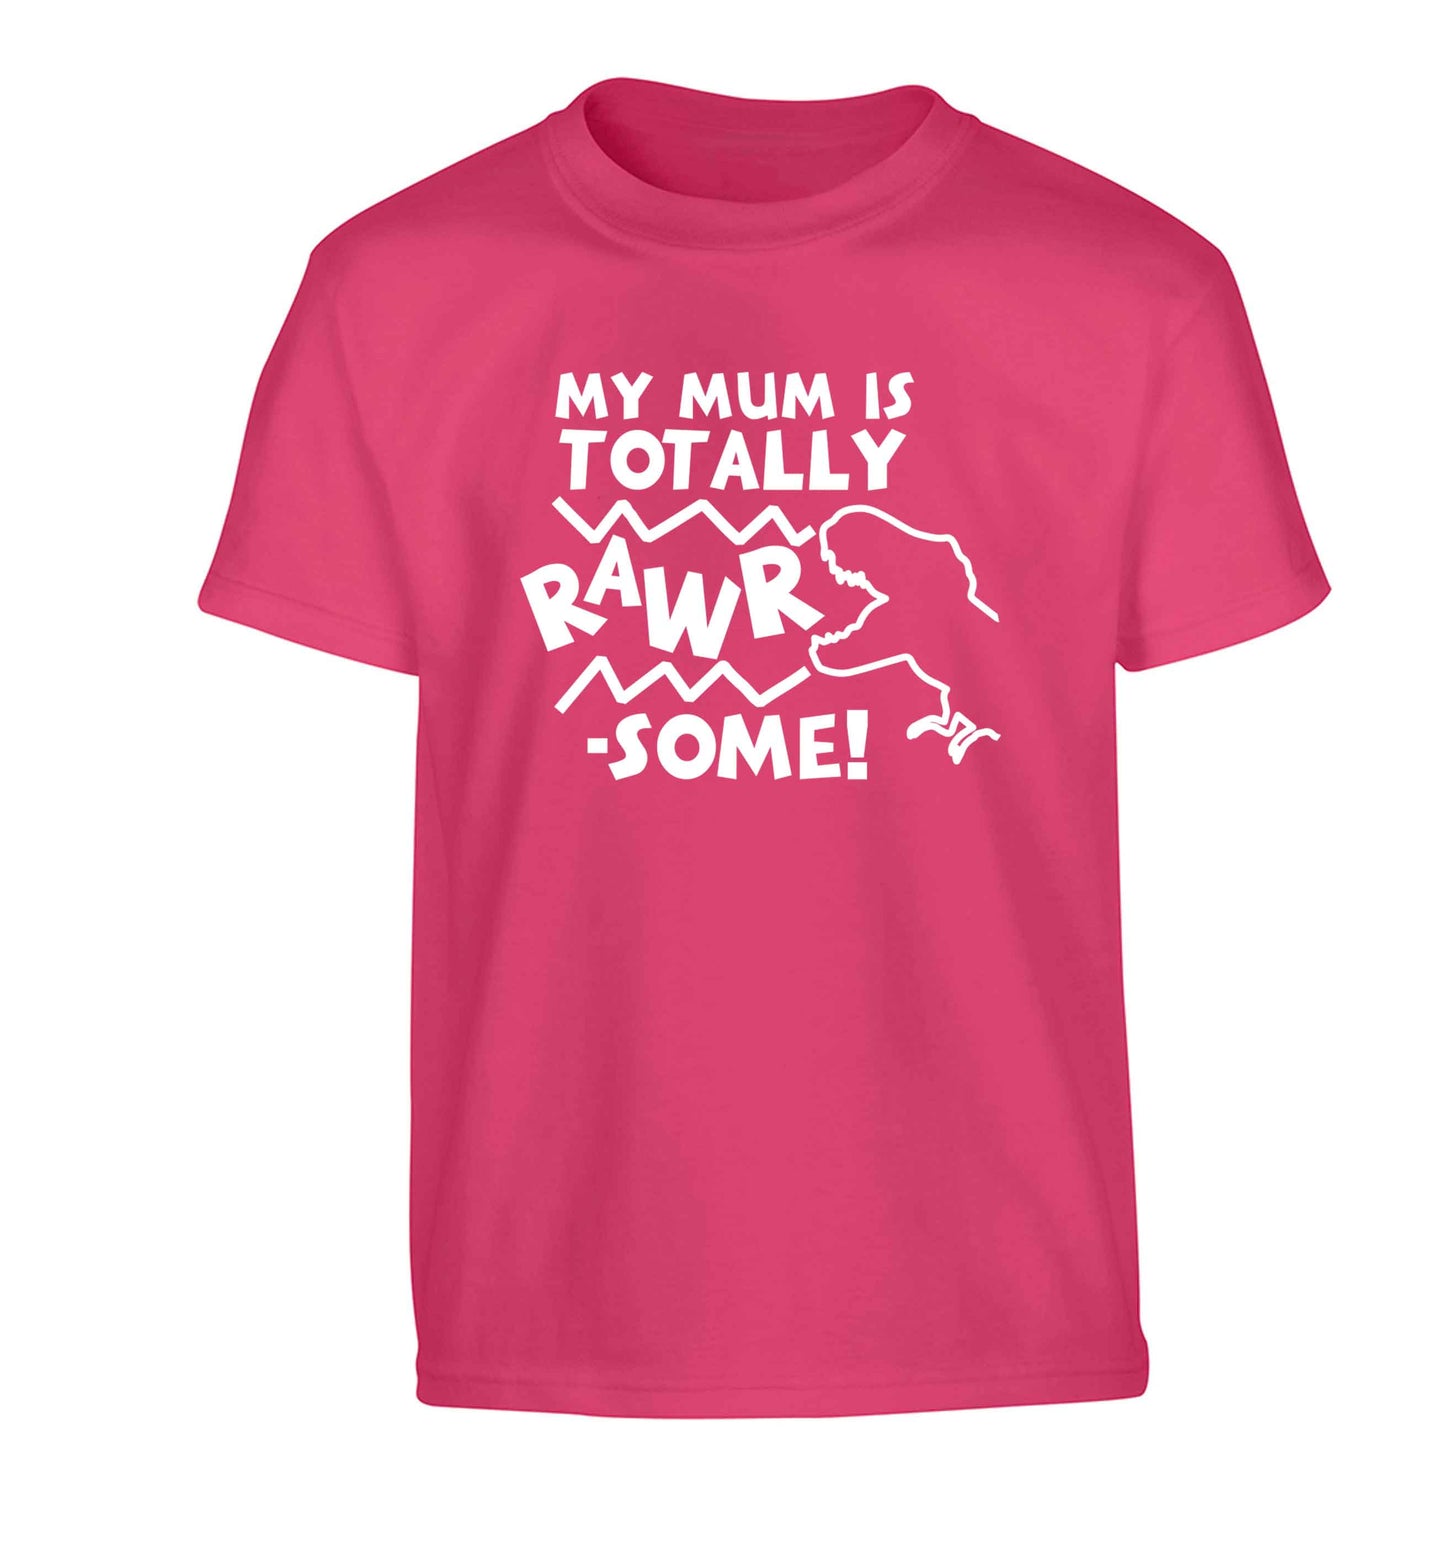 My mum is totally rawrsome Children's pink Tshirt 12-13 Years